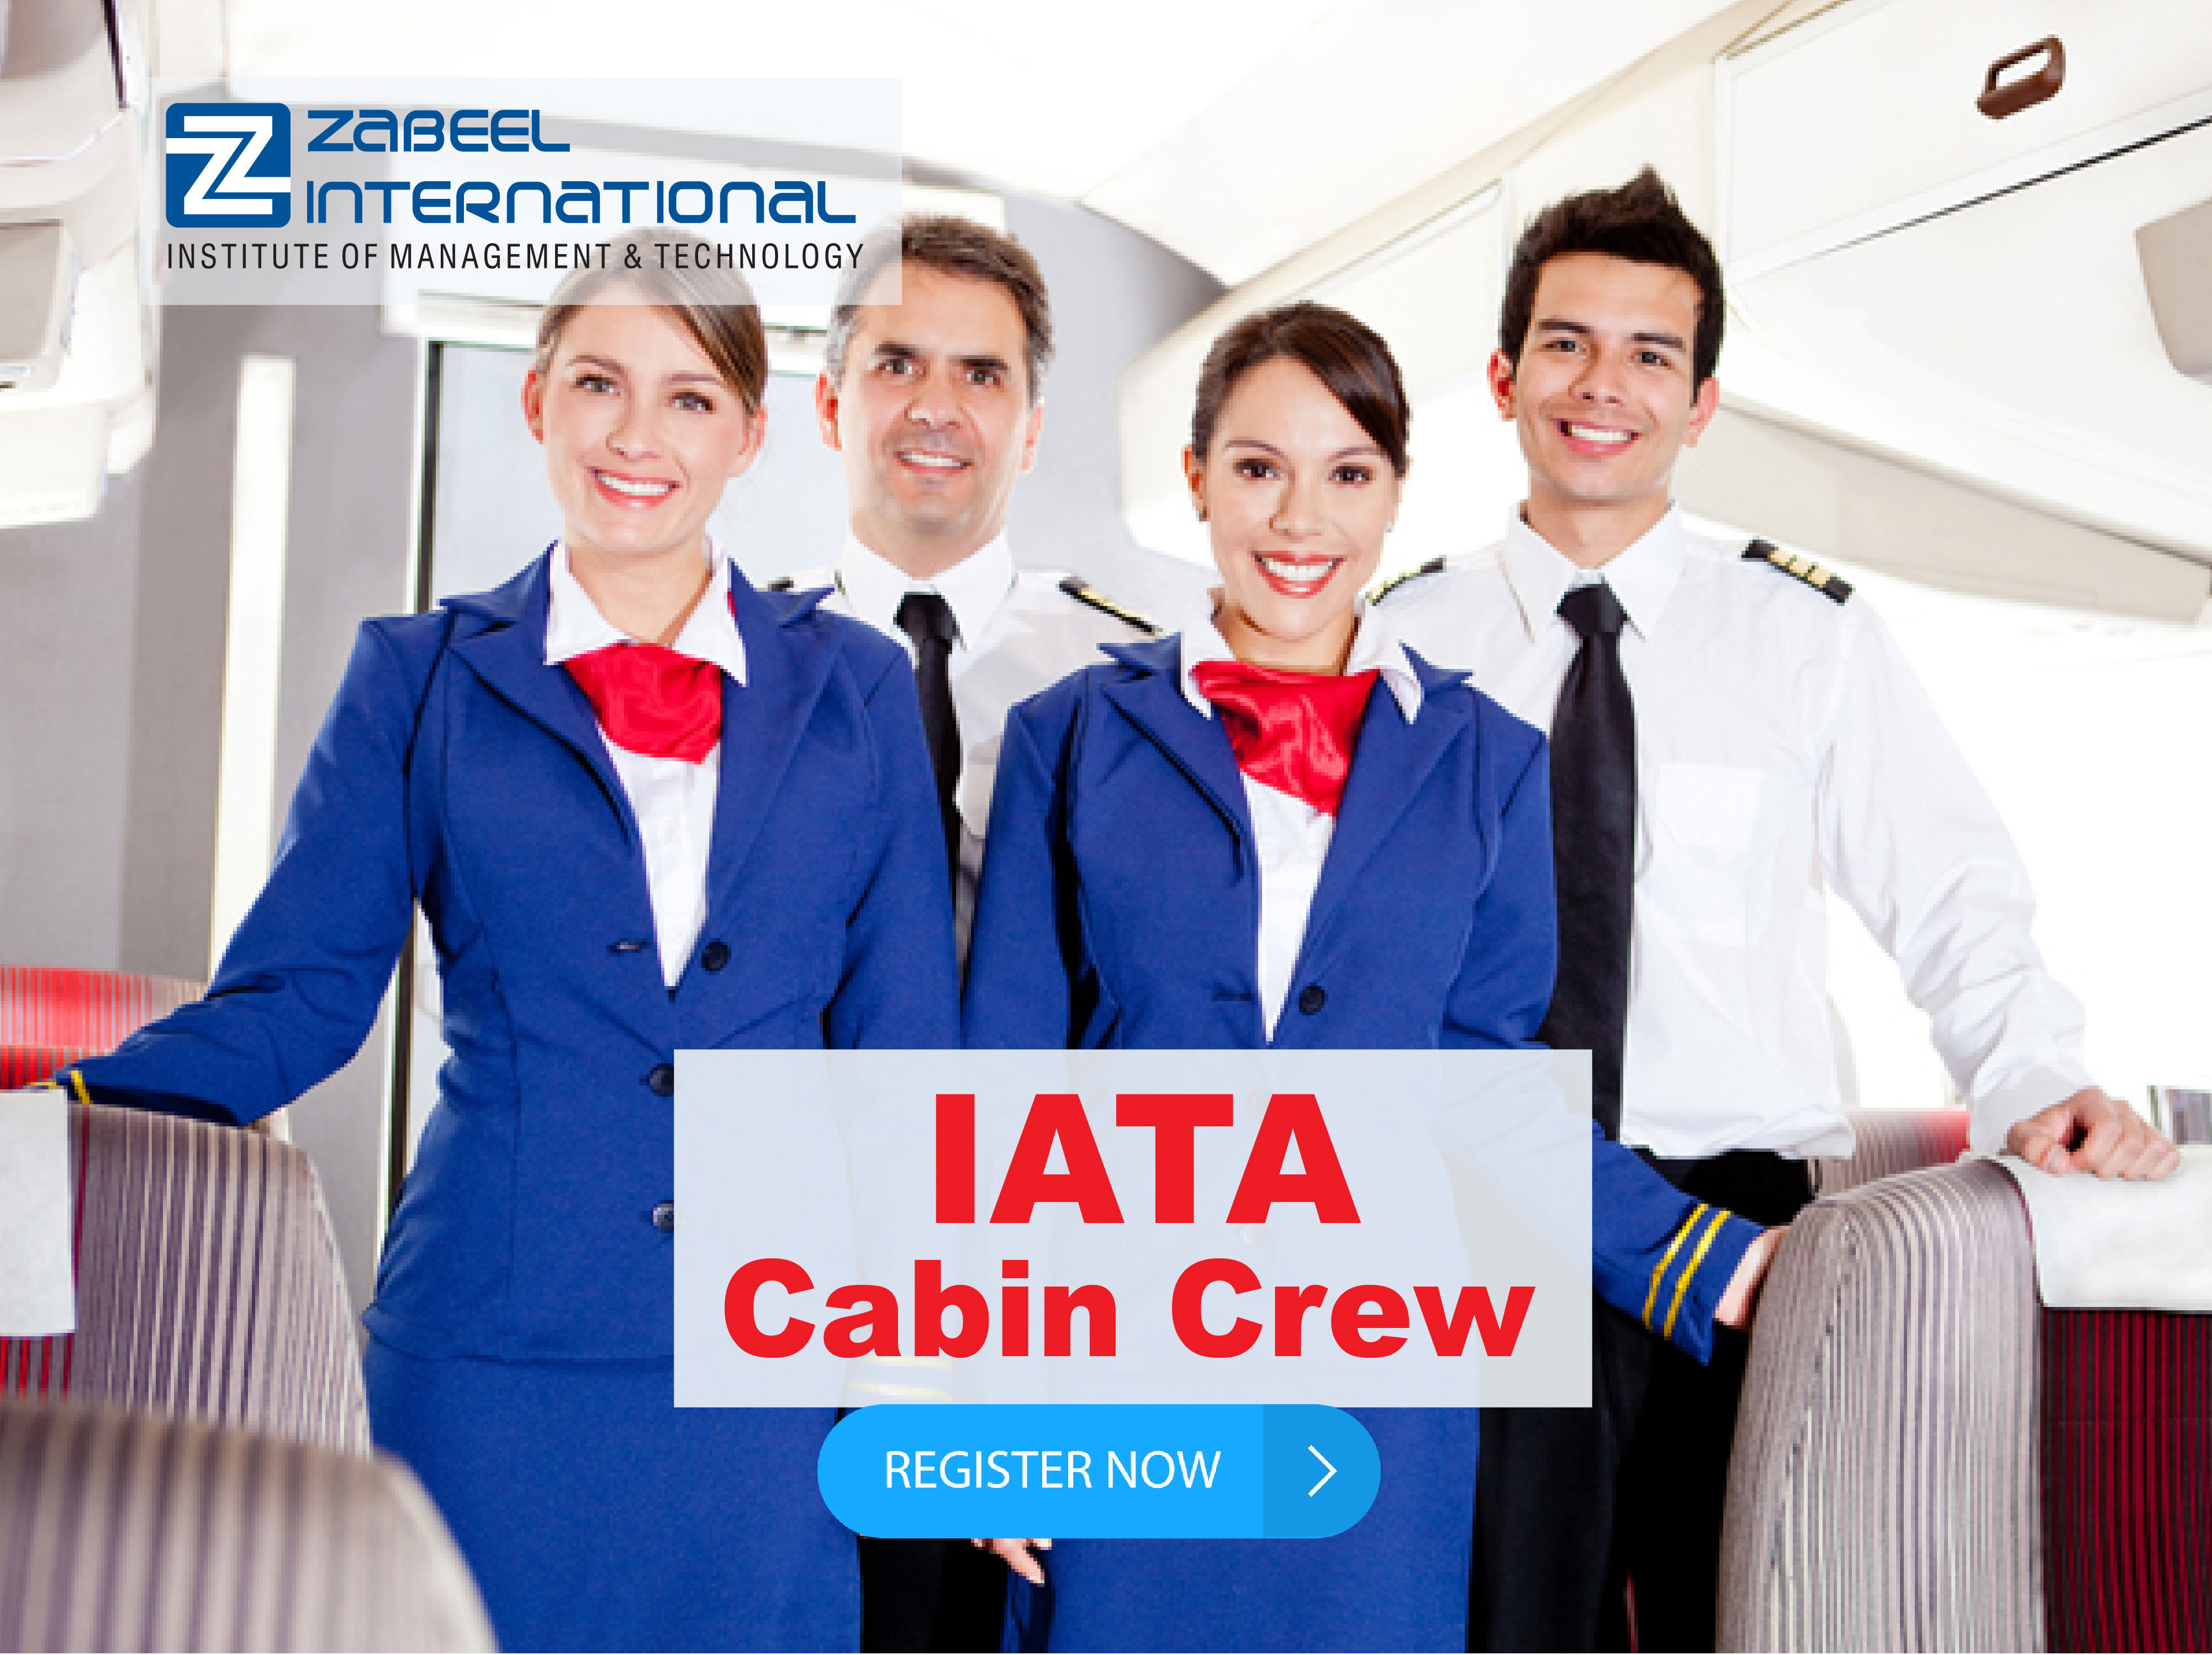 IATA Cabin Crew Certification Training Course in Dubai, Dubai, United Arab Emirates